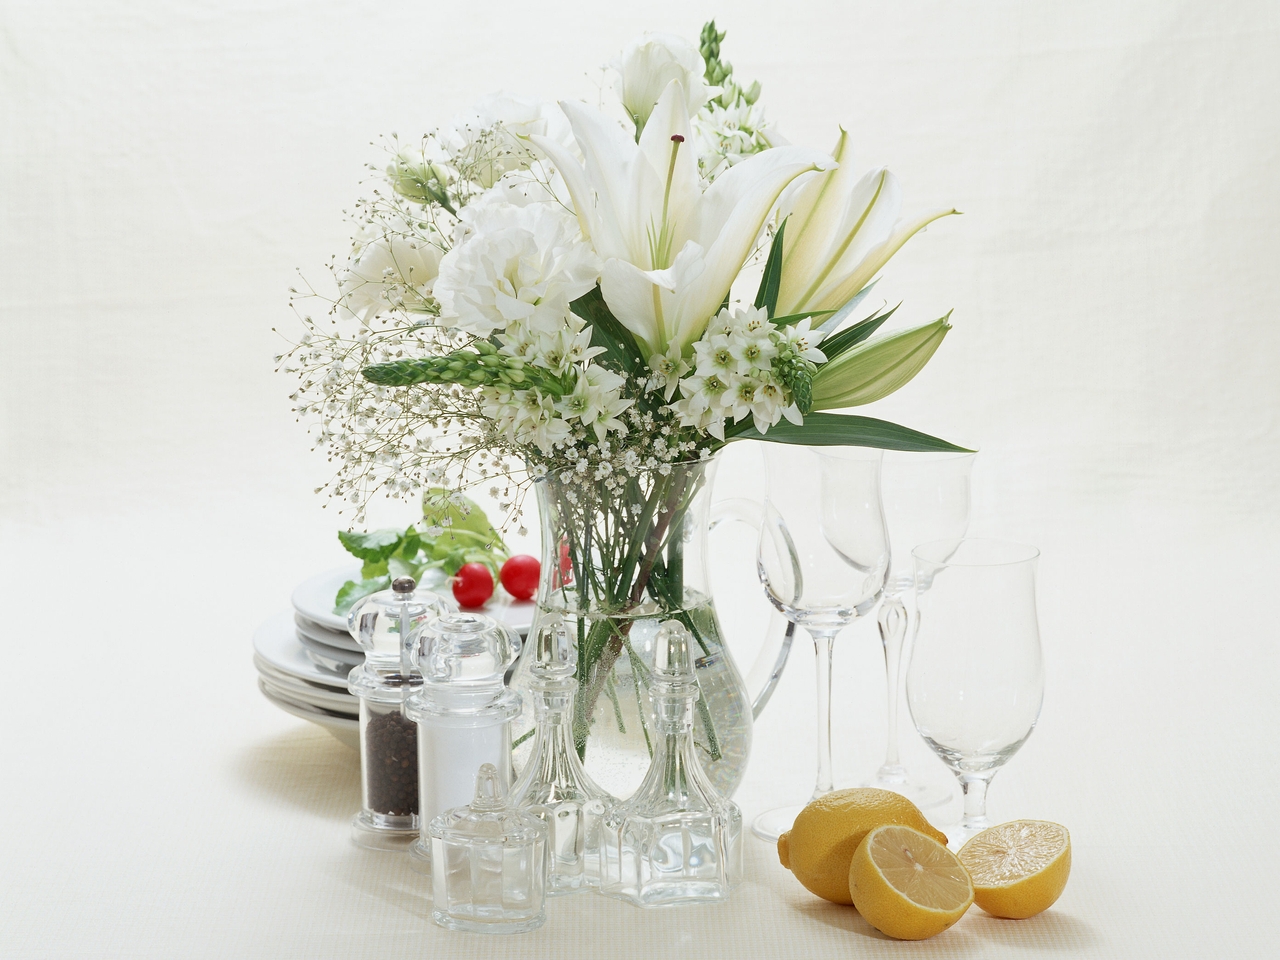 Image: Flowers, vase, tableware, wine glasses, lemon